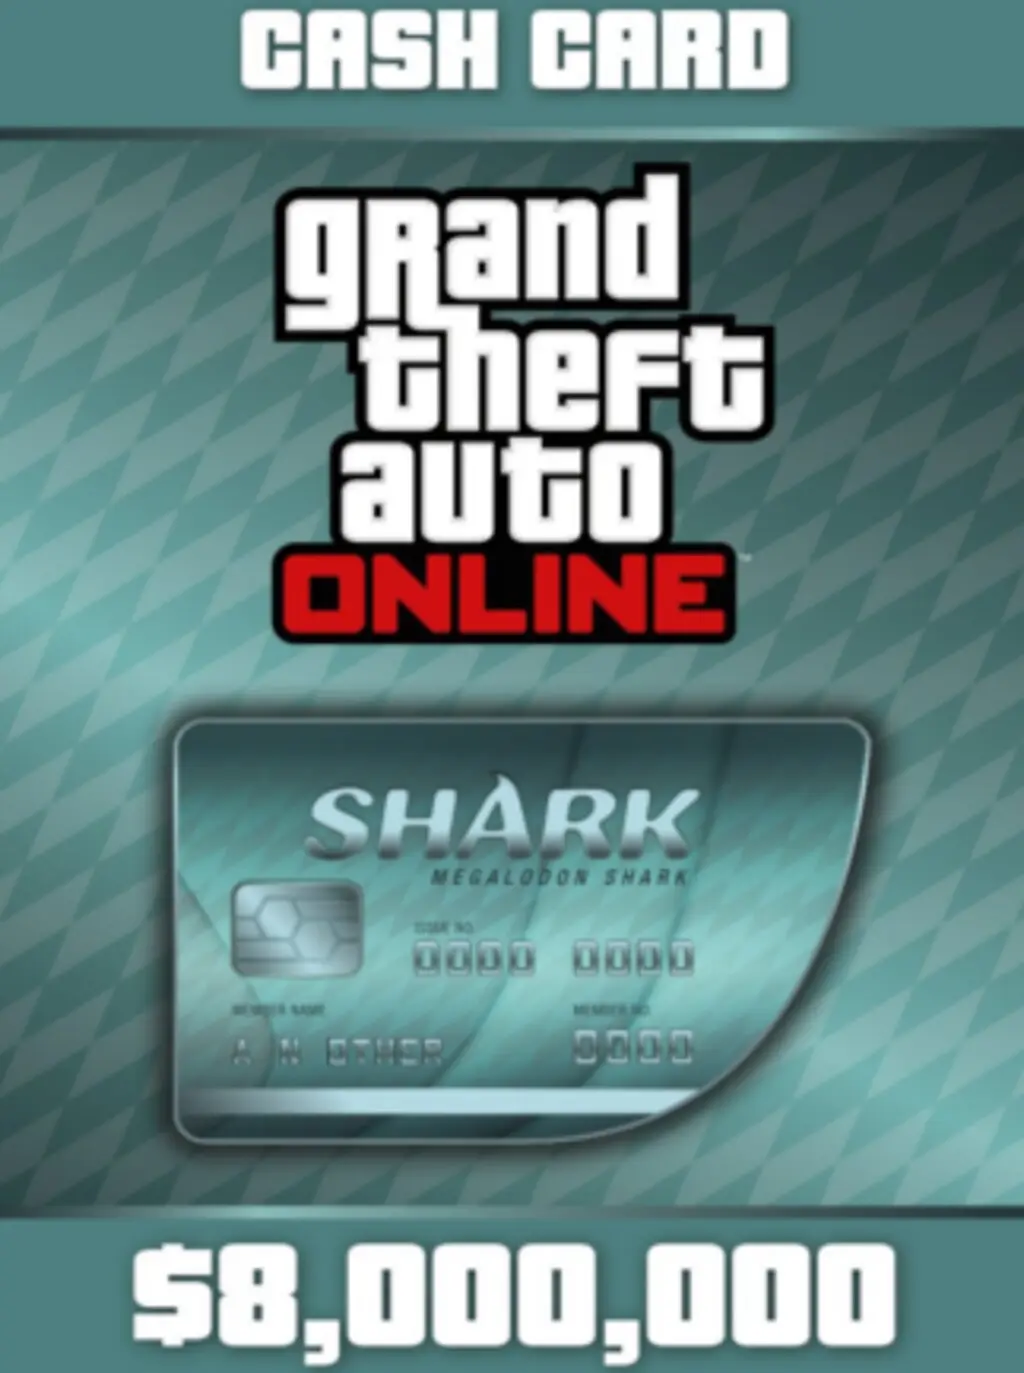 Grand Theft Auto V + Megalodon Shark Cash Card (PC) - Rockstar Games - Digital Code